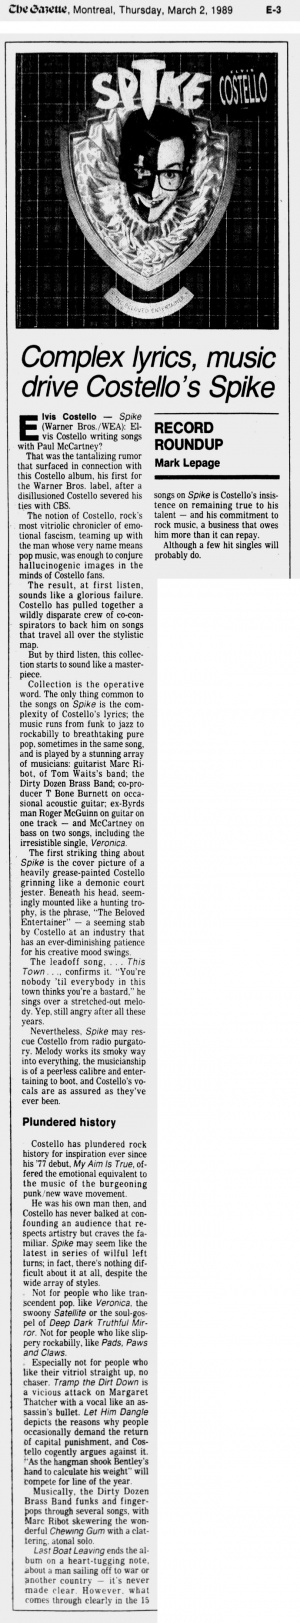 1989-03-02 Montreal Gazette page E-3 clipping 01.jpg